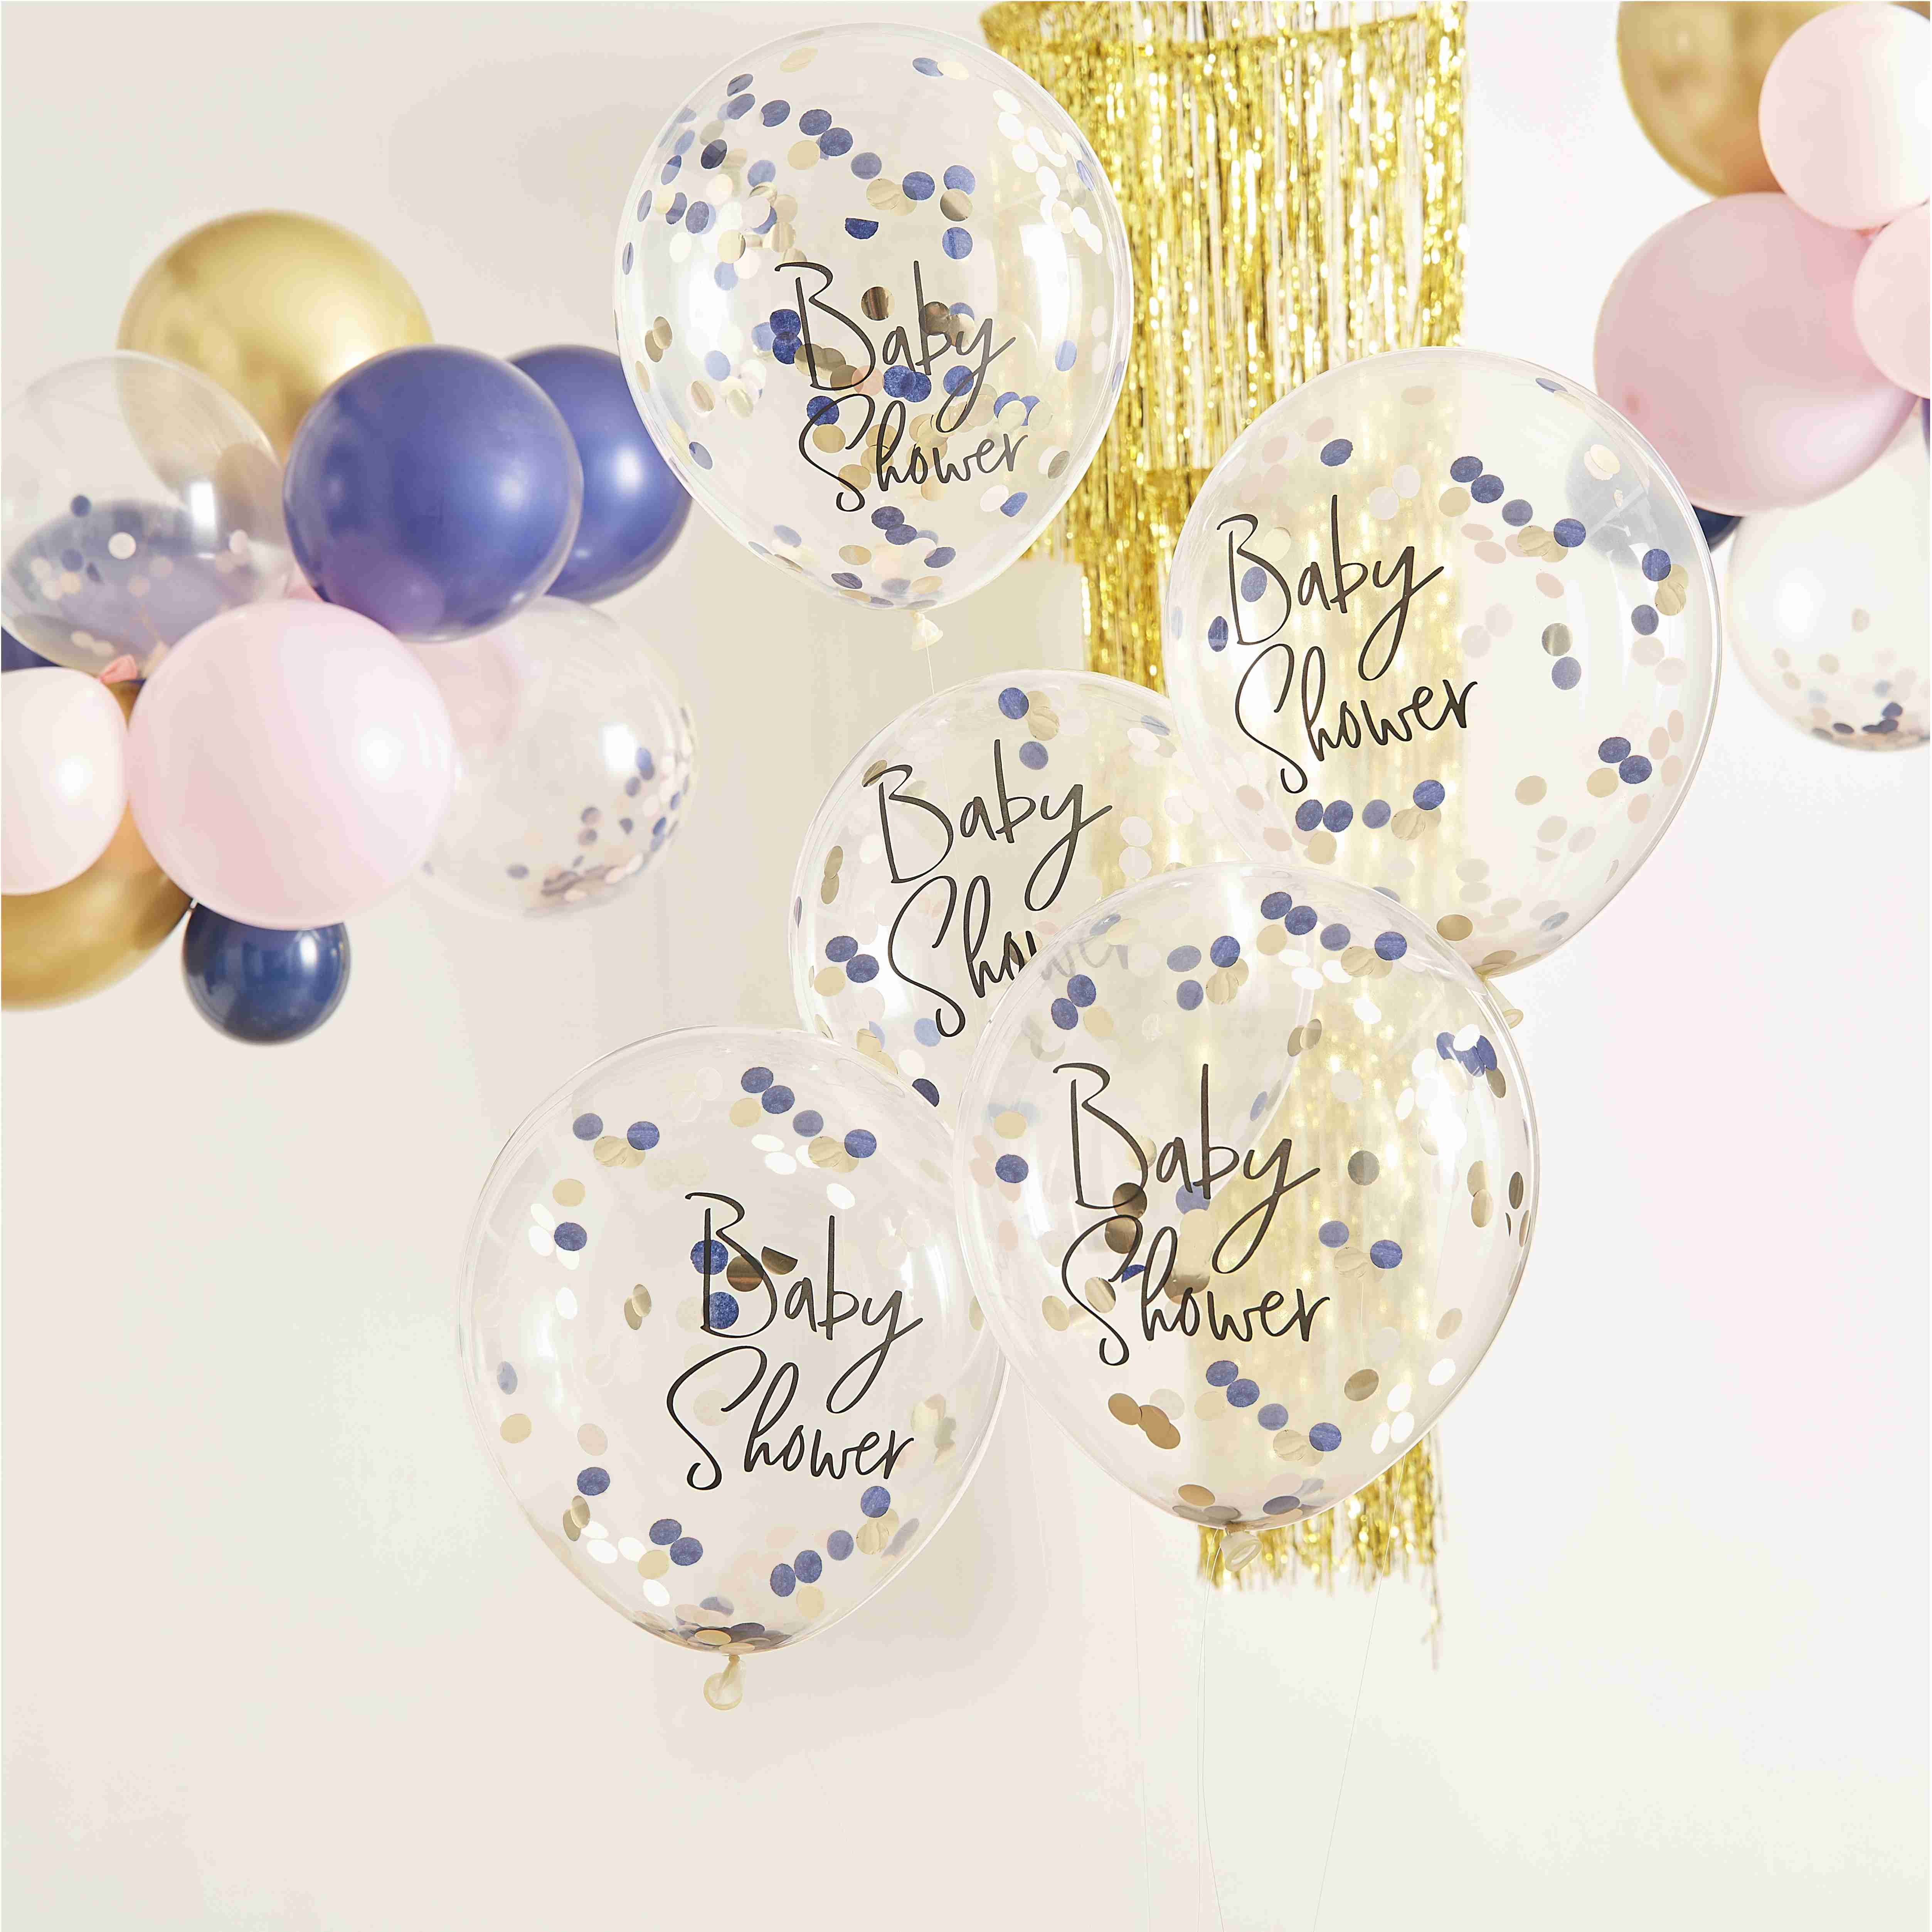 Ballons confettis baby shower gender reveal bleu rose